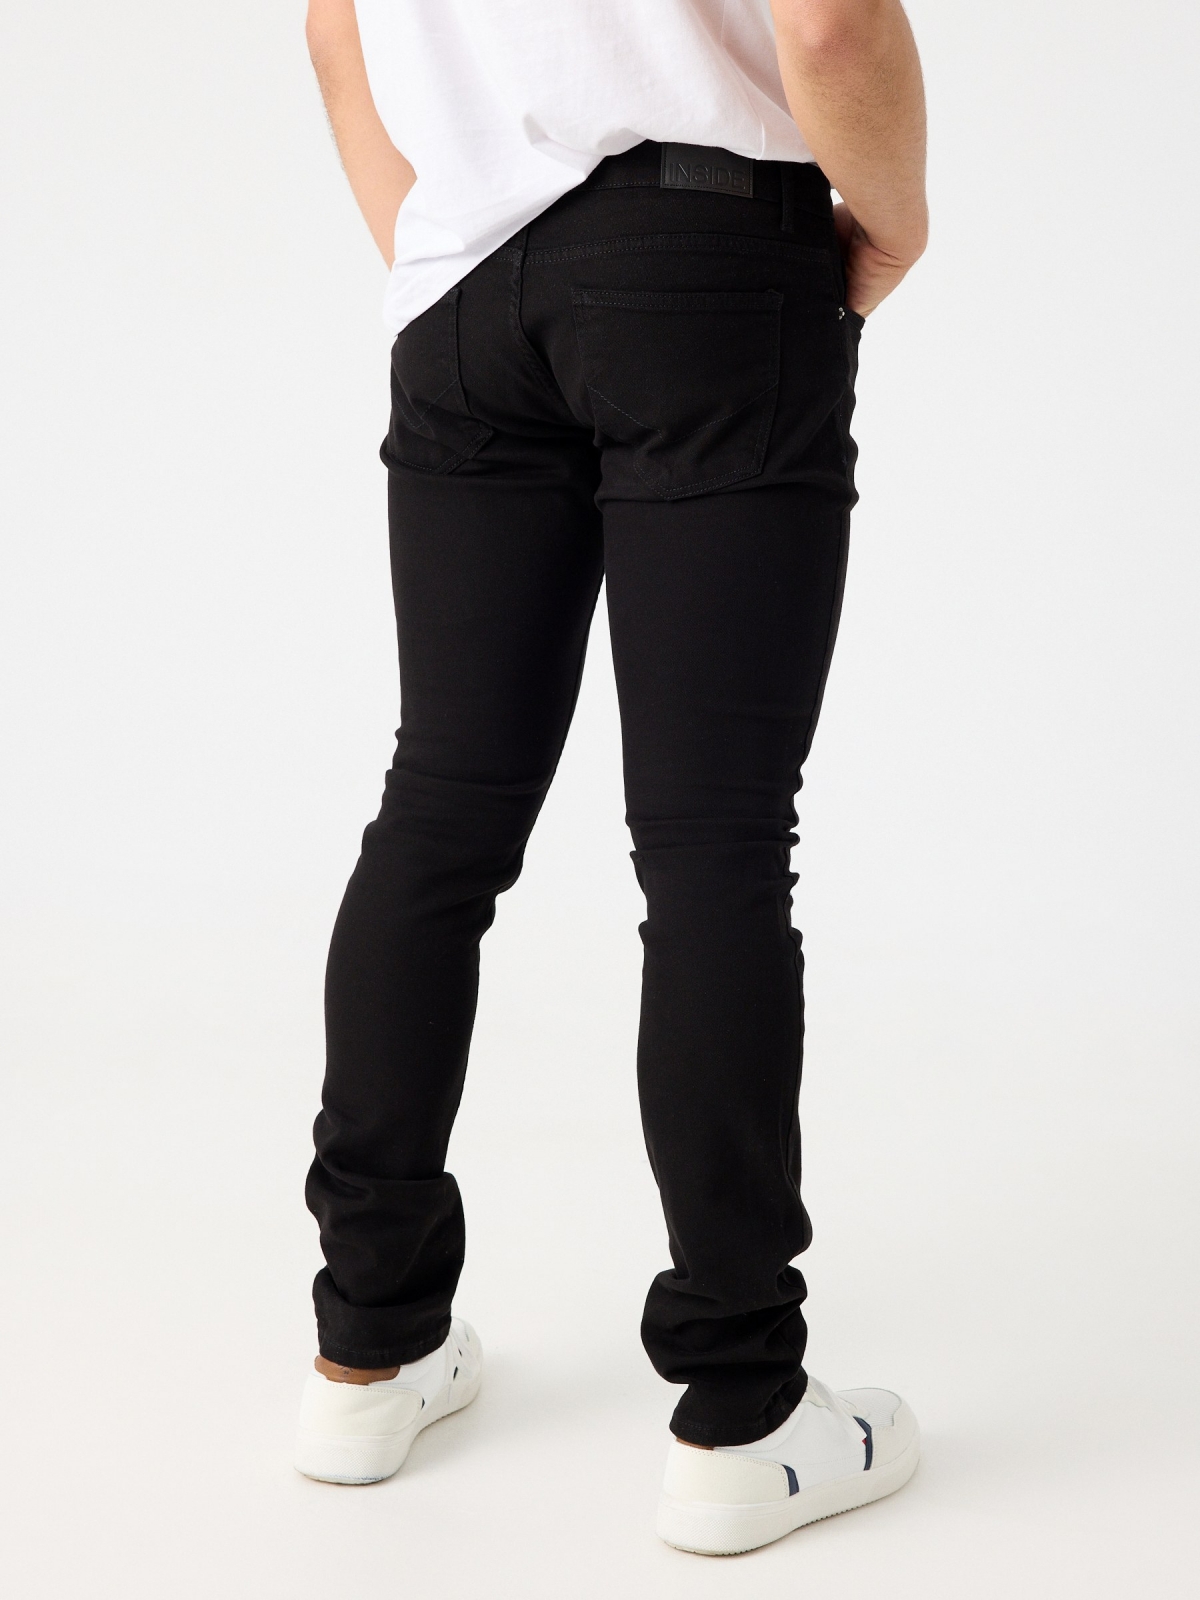 Jeans básico cinco bolsillos negro vista media trasera